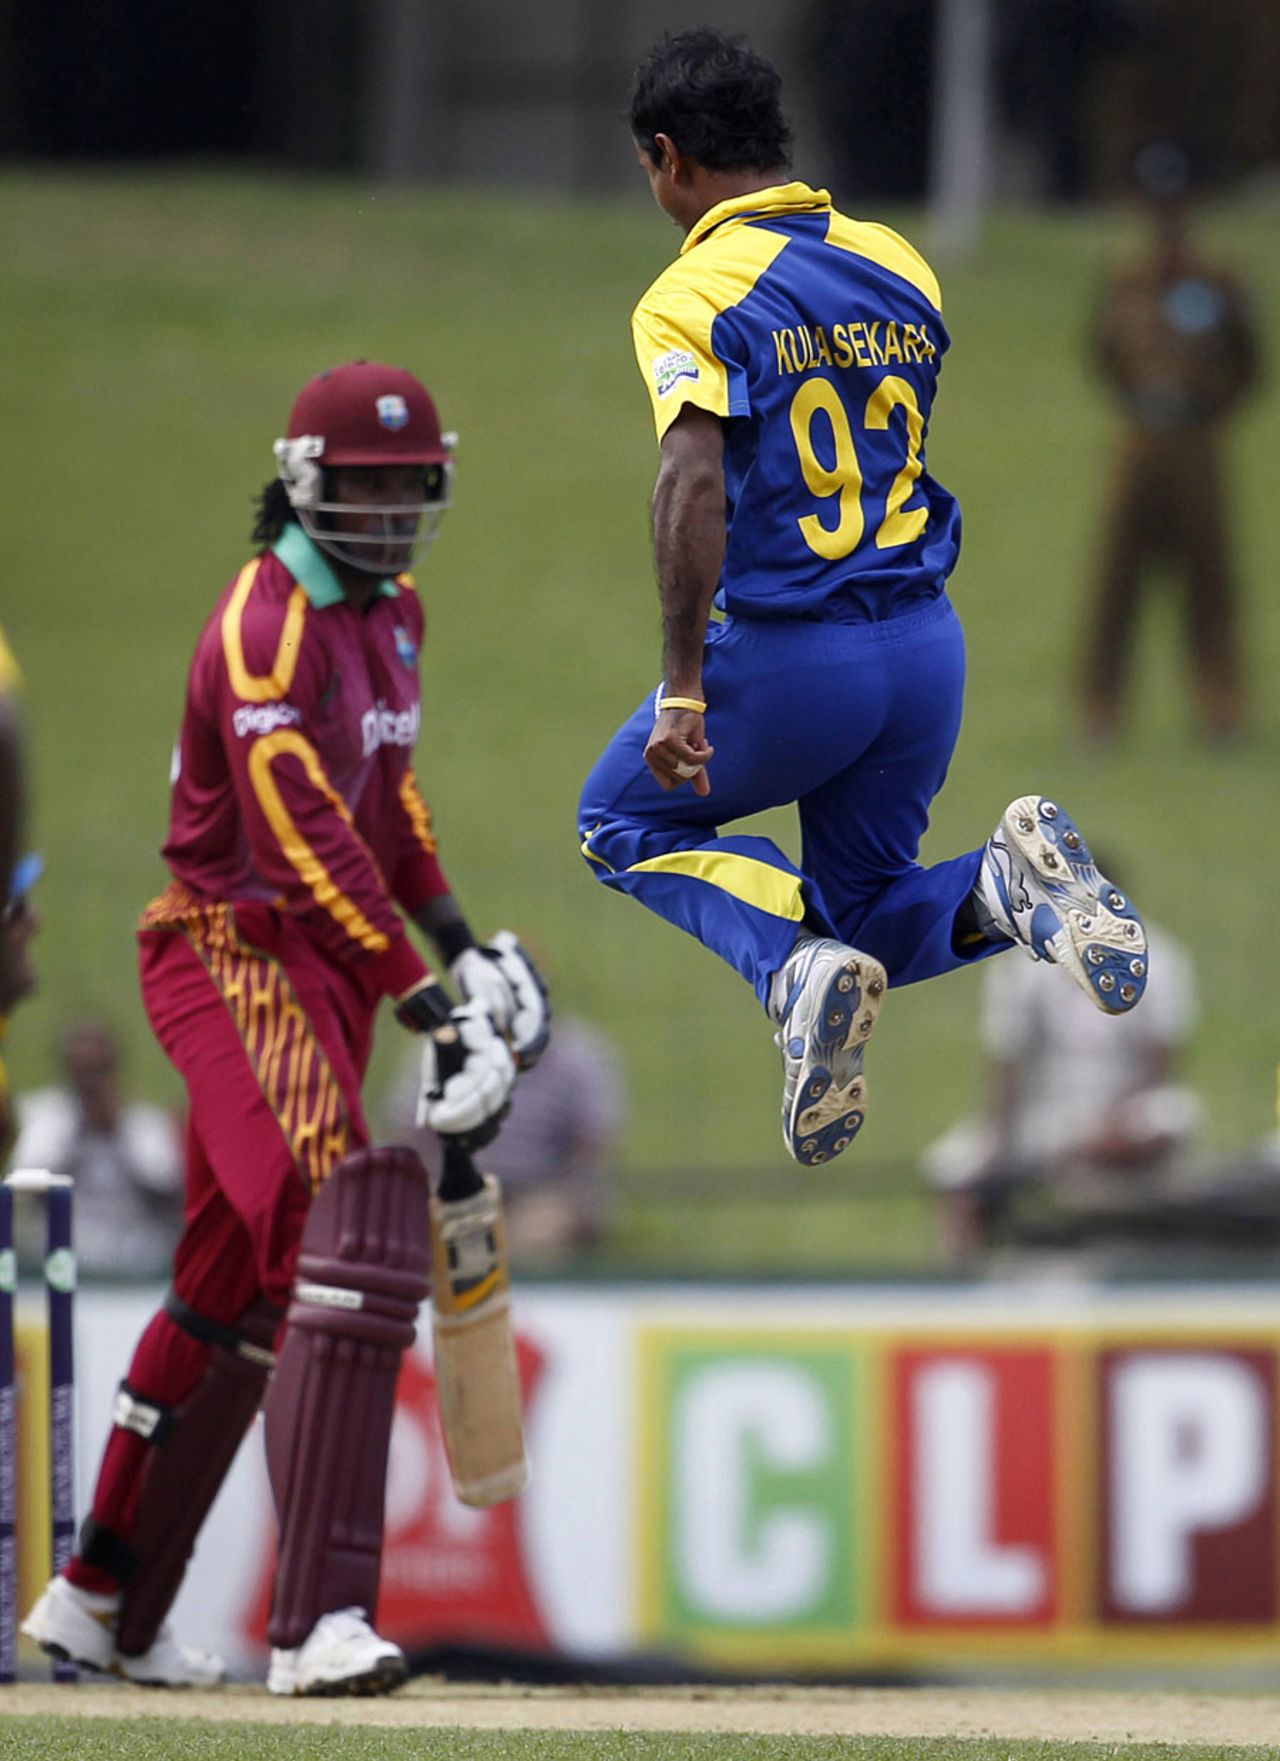 Nuwan Kulasekara celebrates after he dismissed Chris Gayle, Sri Lanka v West Indies, 1st ODI, SSC, Colombo, January 31, 2011